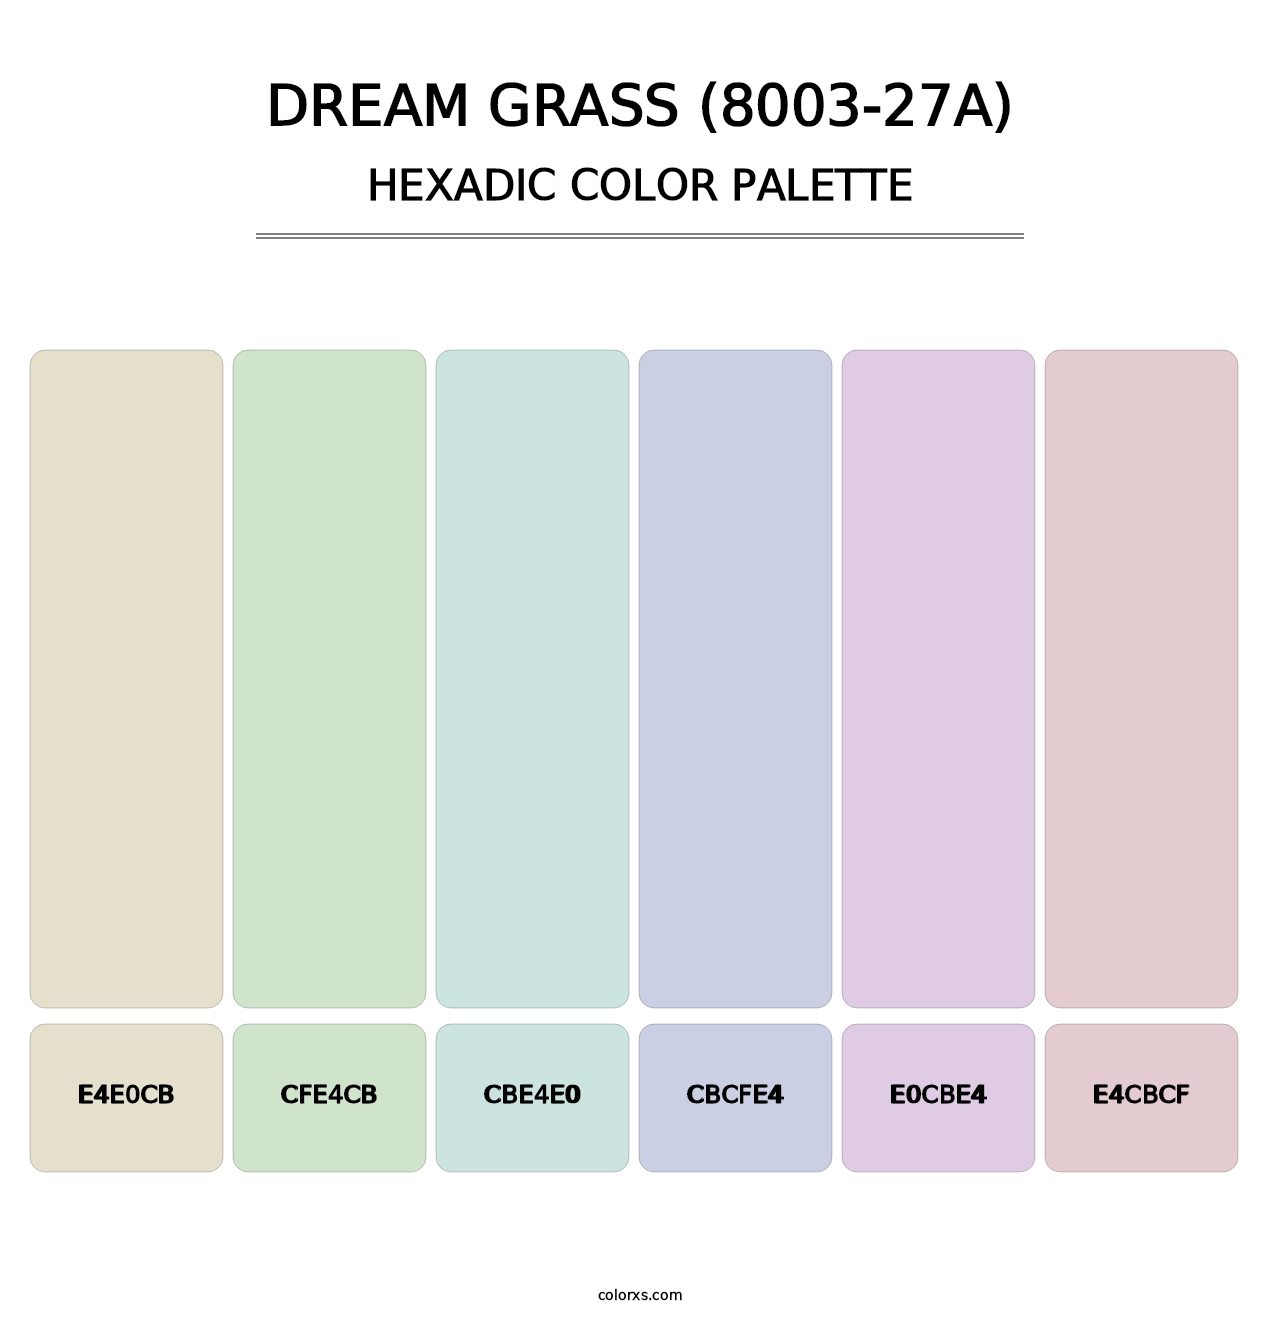 Dream Grass (8003-27A) - Hexadic Color Palette